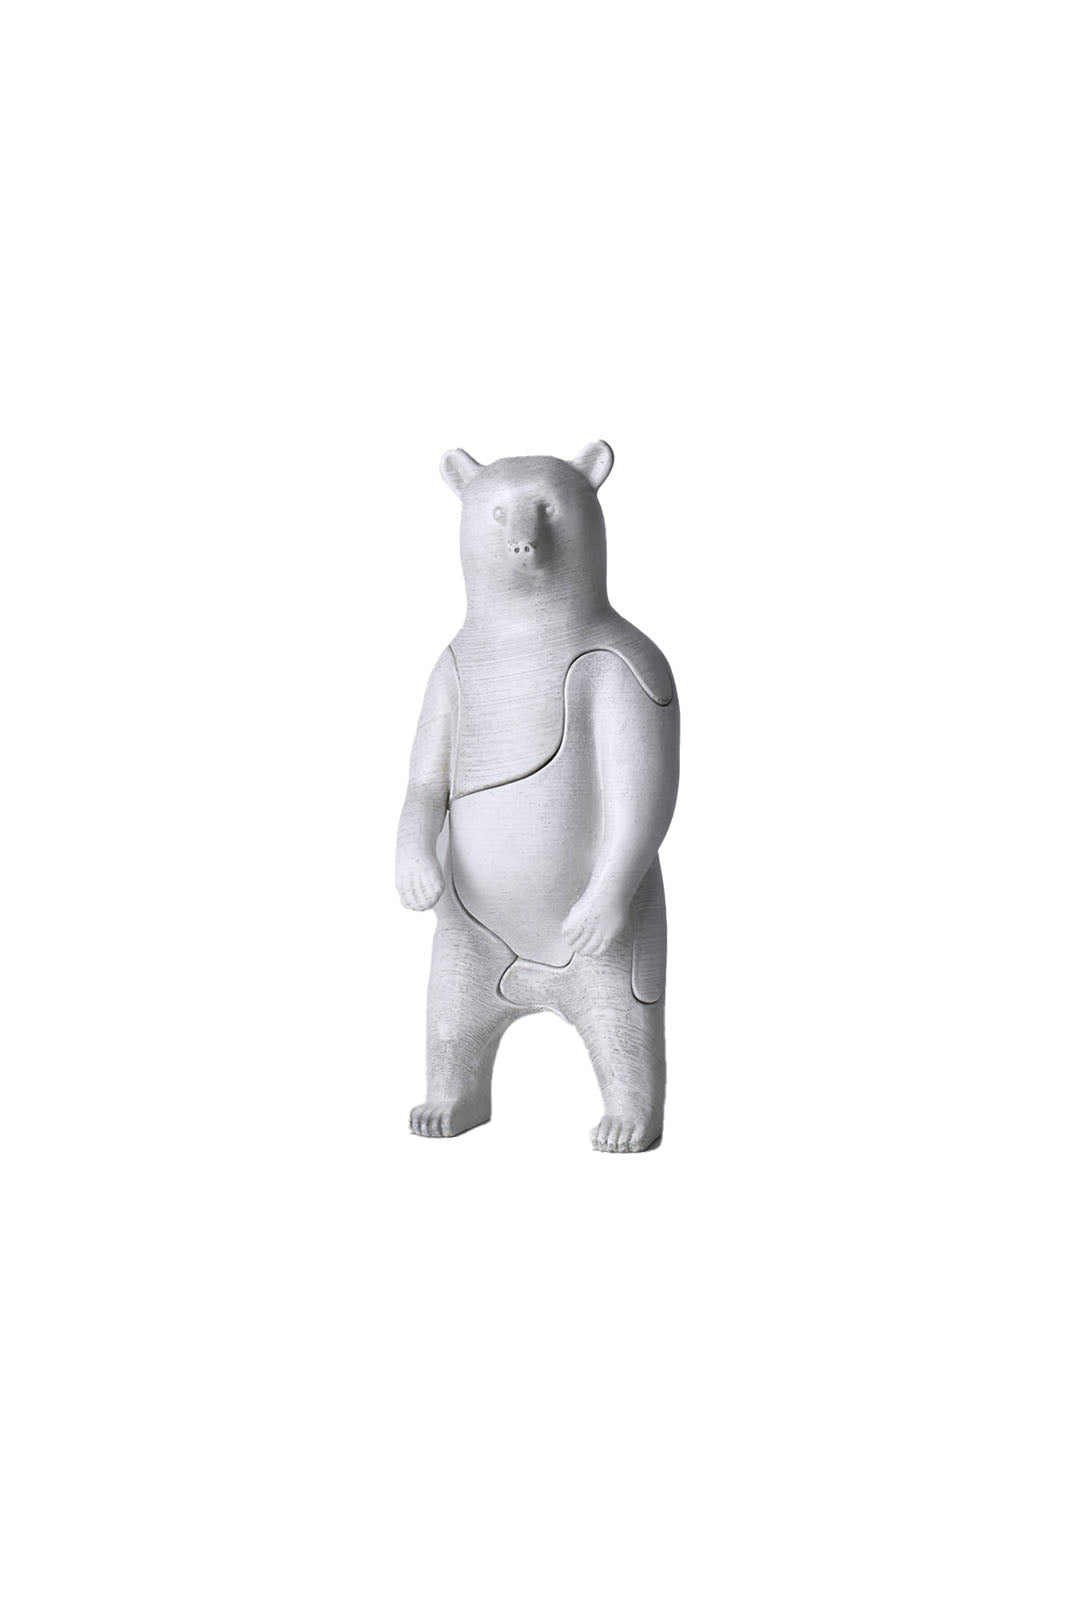 3D Art Object & Puzzle - White Bear